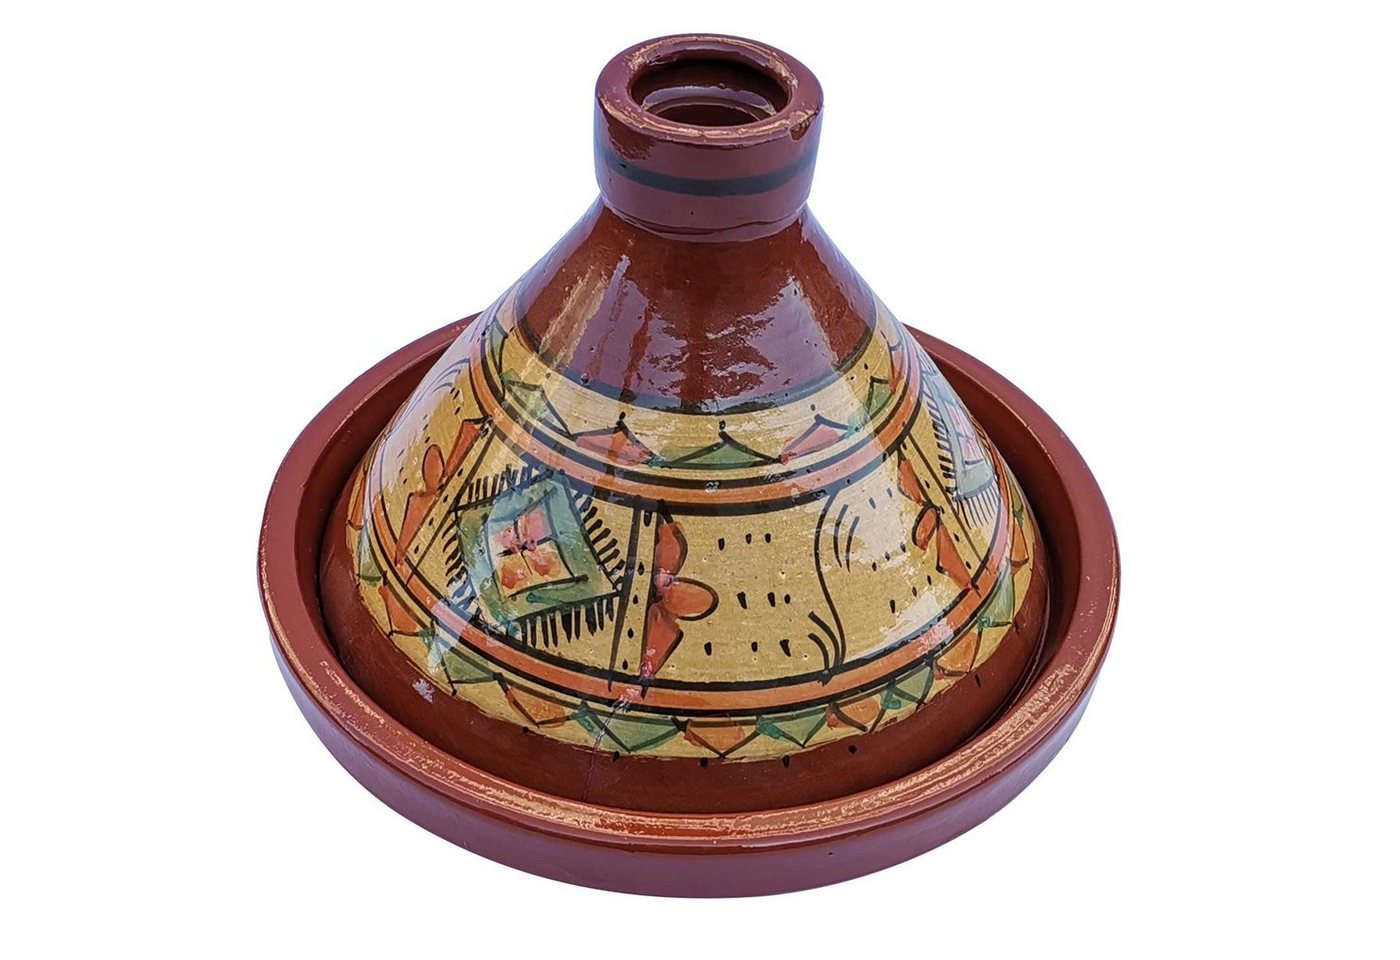 Casa Moro Dampfgartopf Marokkanische Tajine Imlil 34 cm glasiert, handbemalte Tagine, Keramik, Kunsthandwerk aus Marokko von Casa Moro